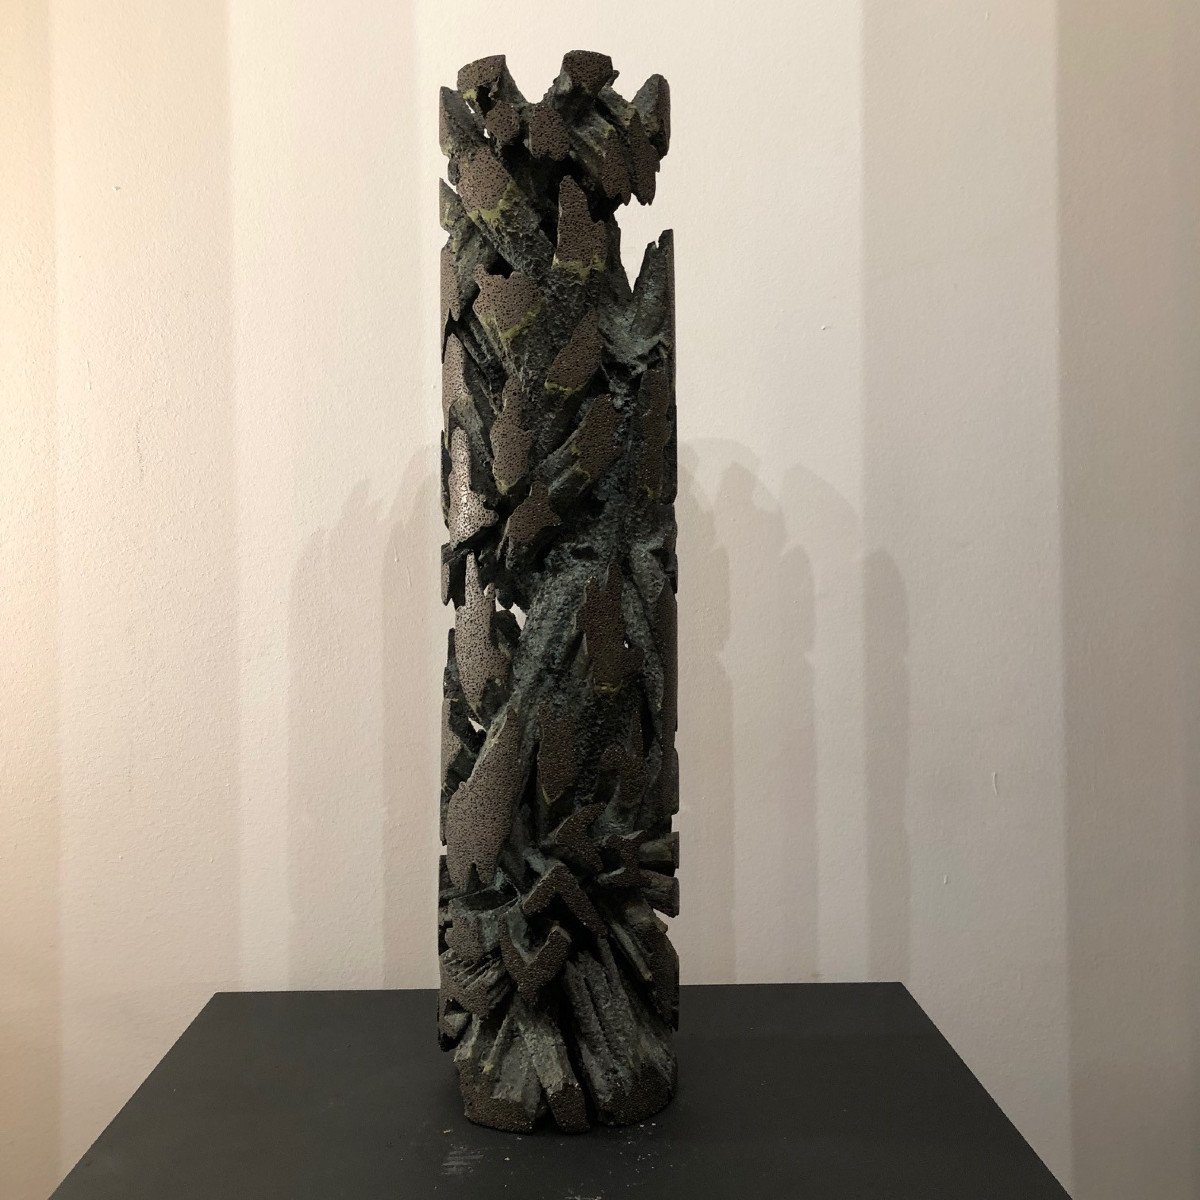 sculpture abstraite et brutaliste en fonte d’aluminium de l’artiste allemand Helmut Schlüter